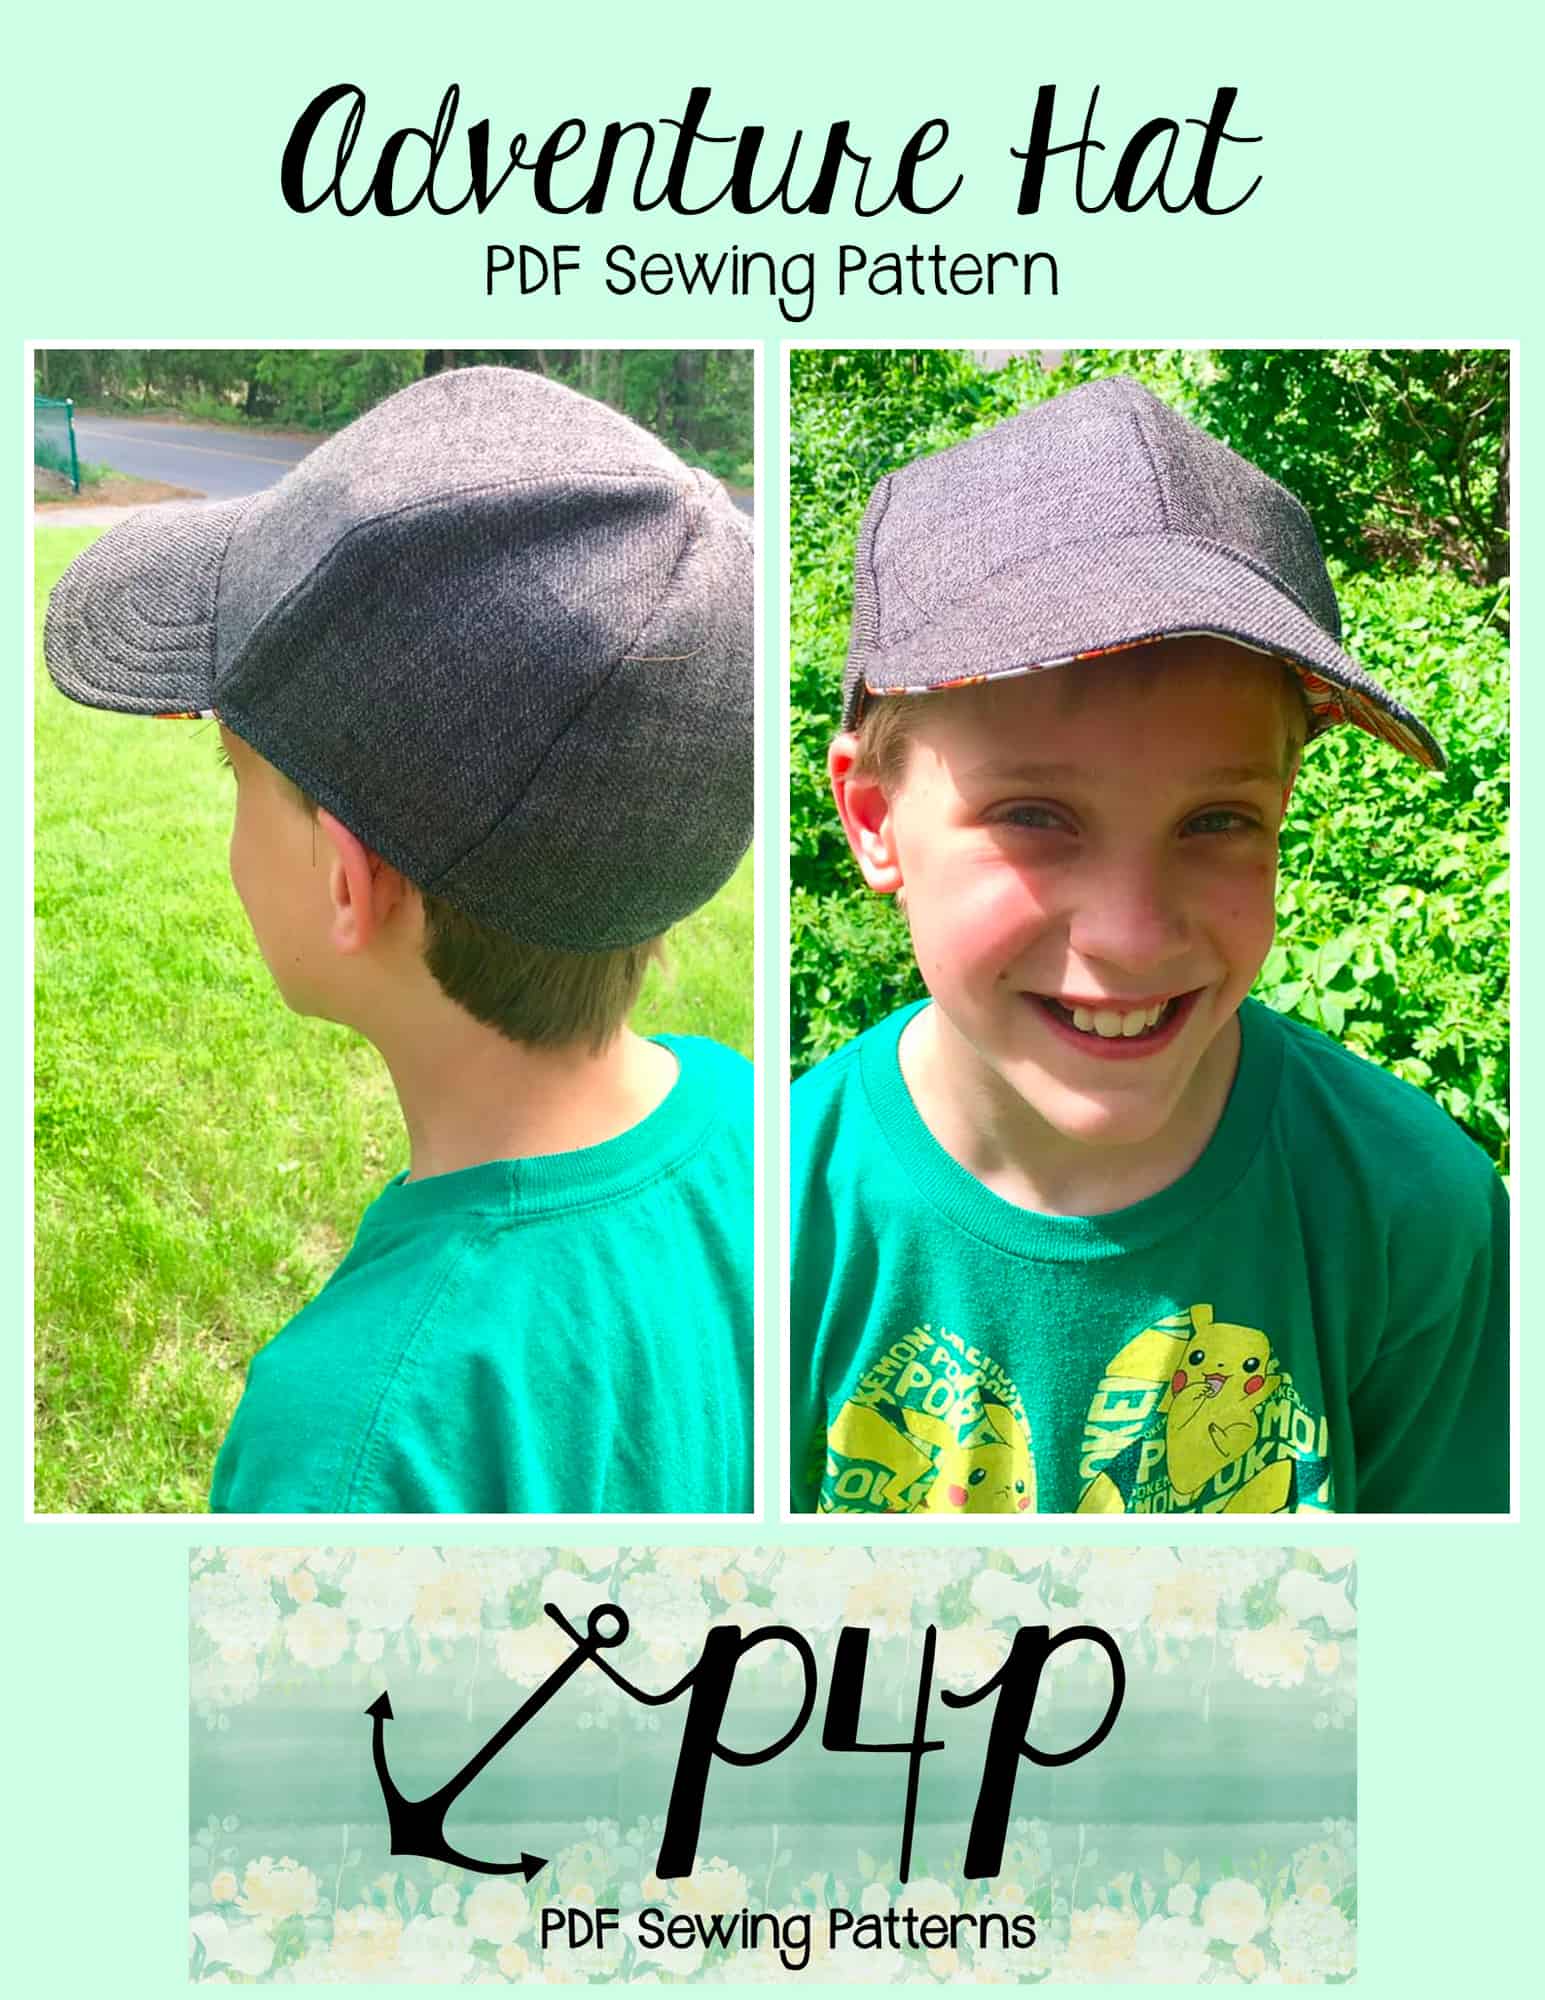 Cool cap sewing pattern